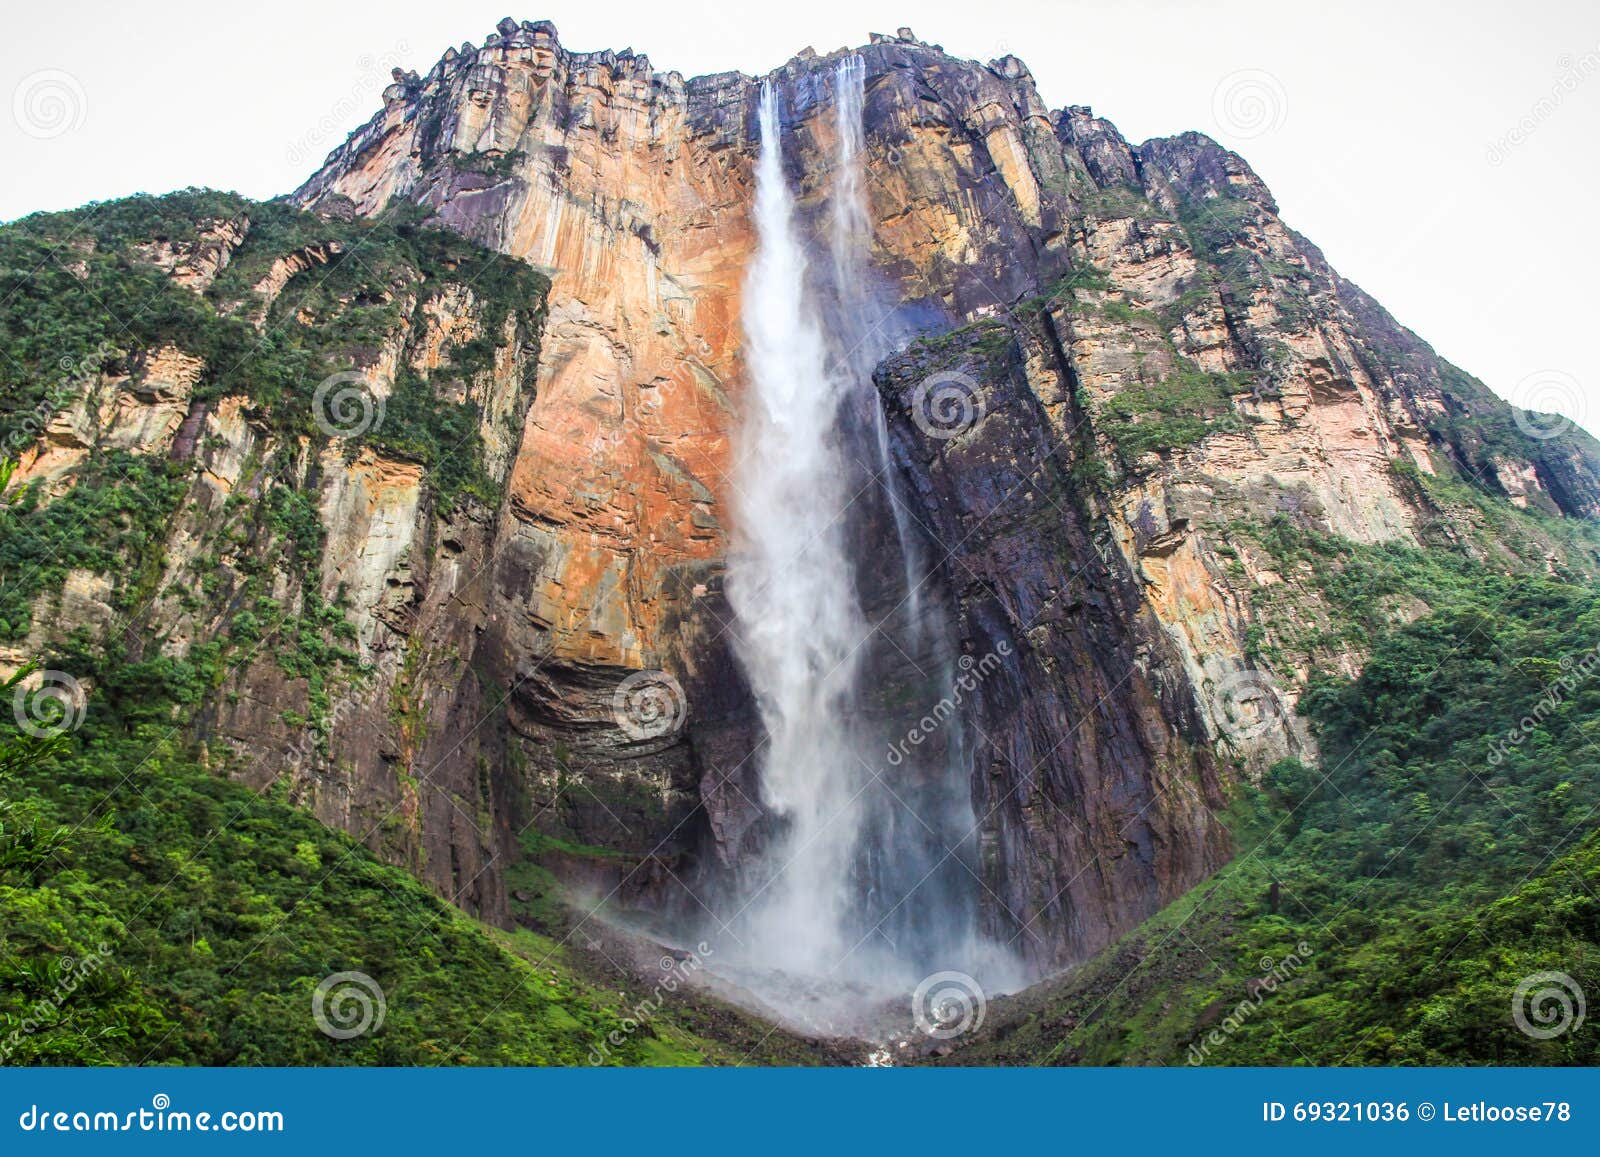 angel falls, canaima national park, gran sabana, venezuela